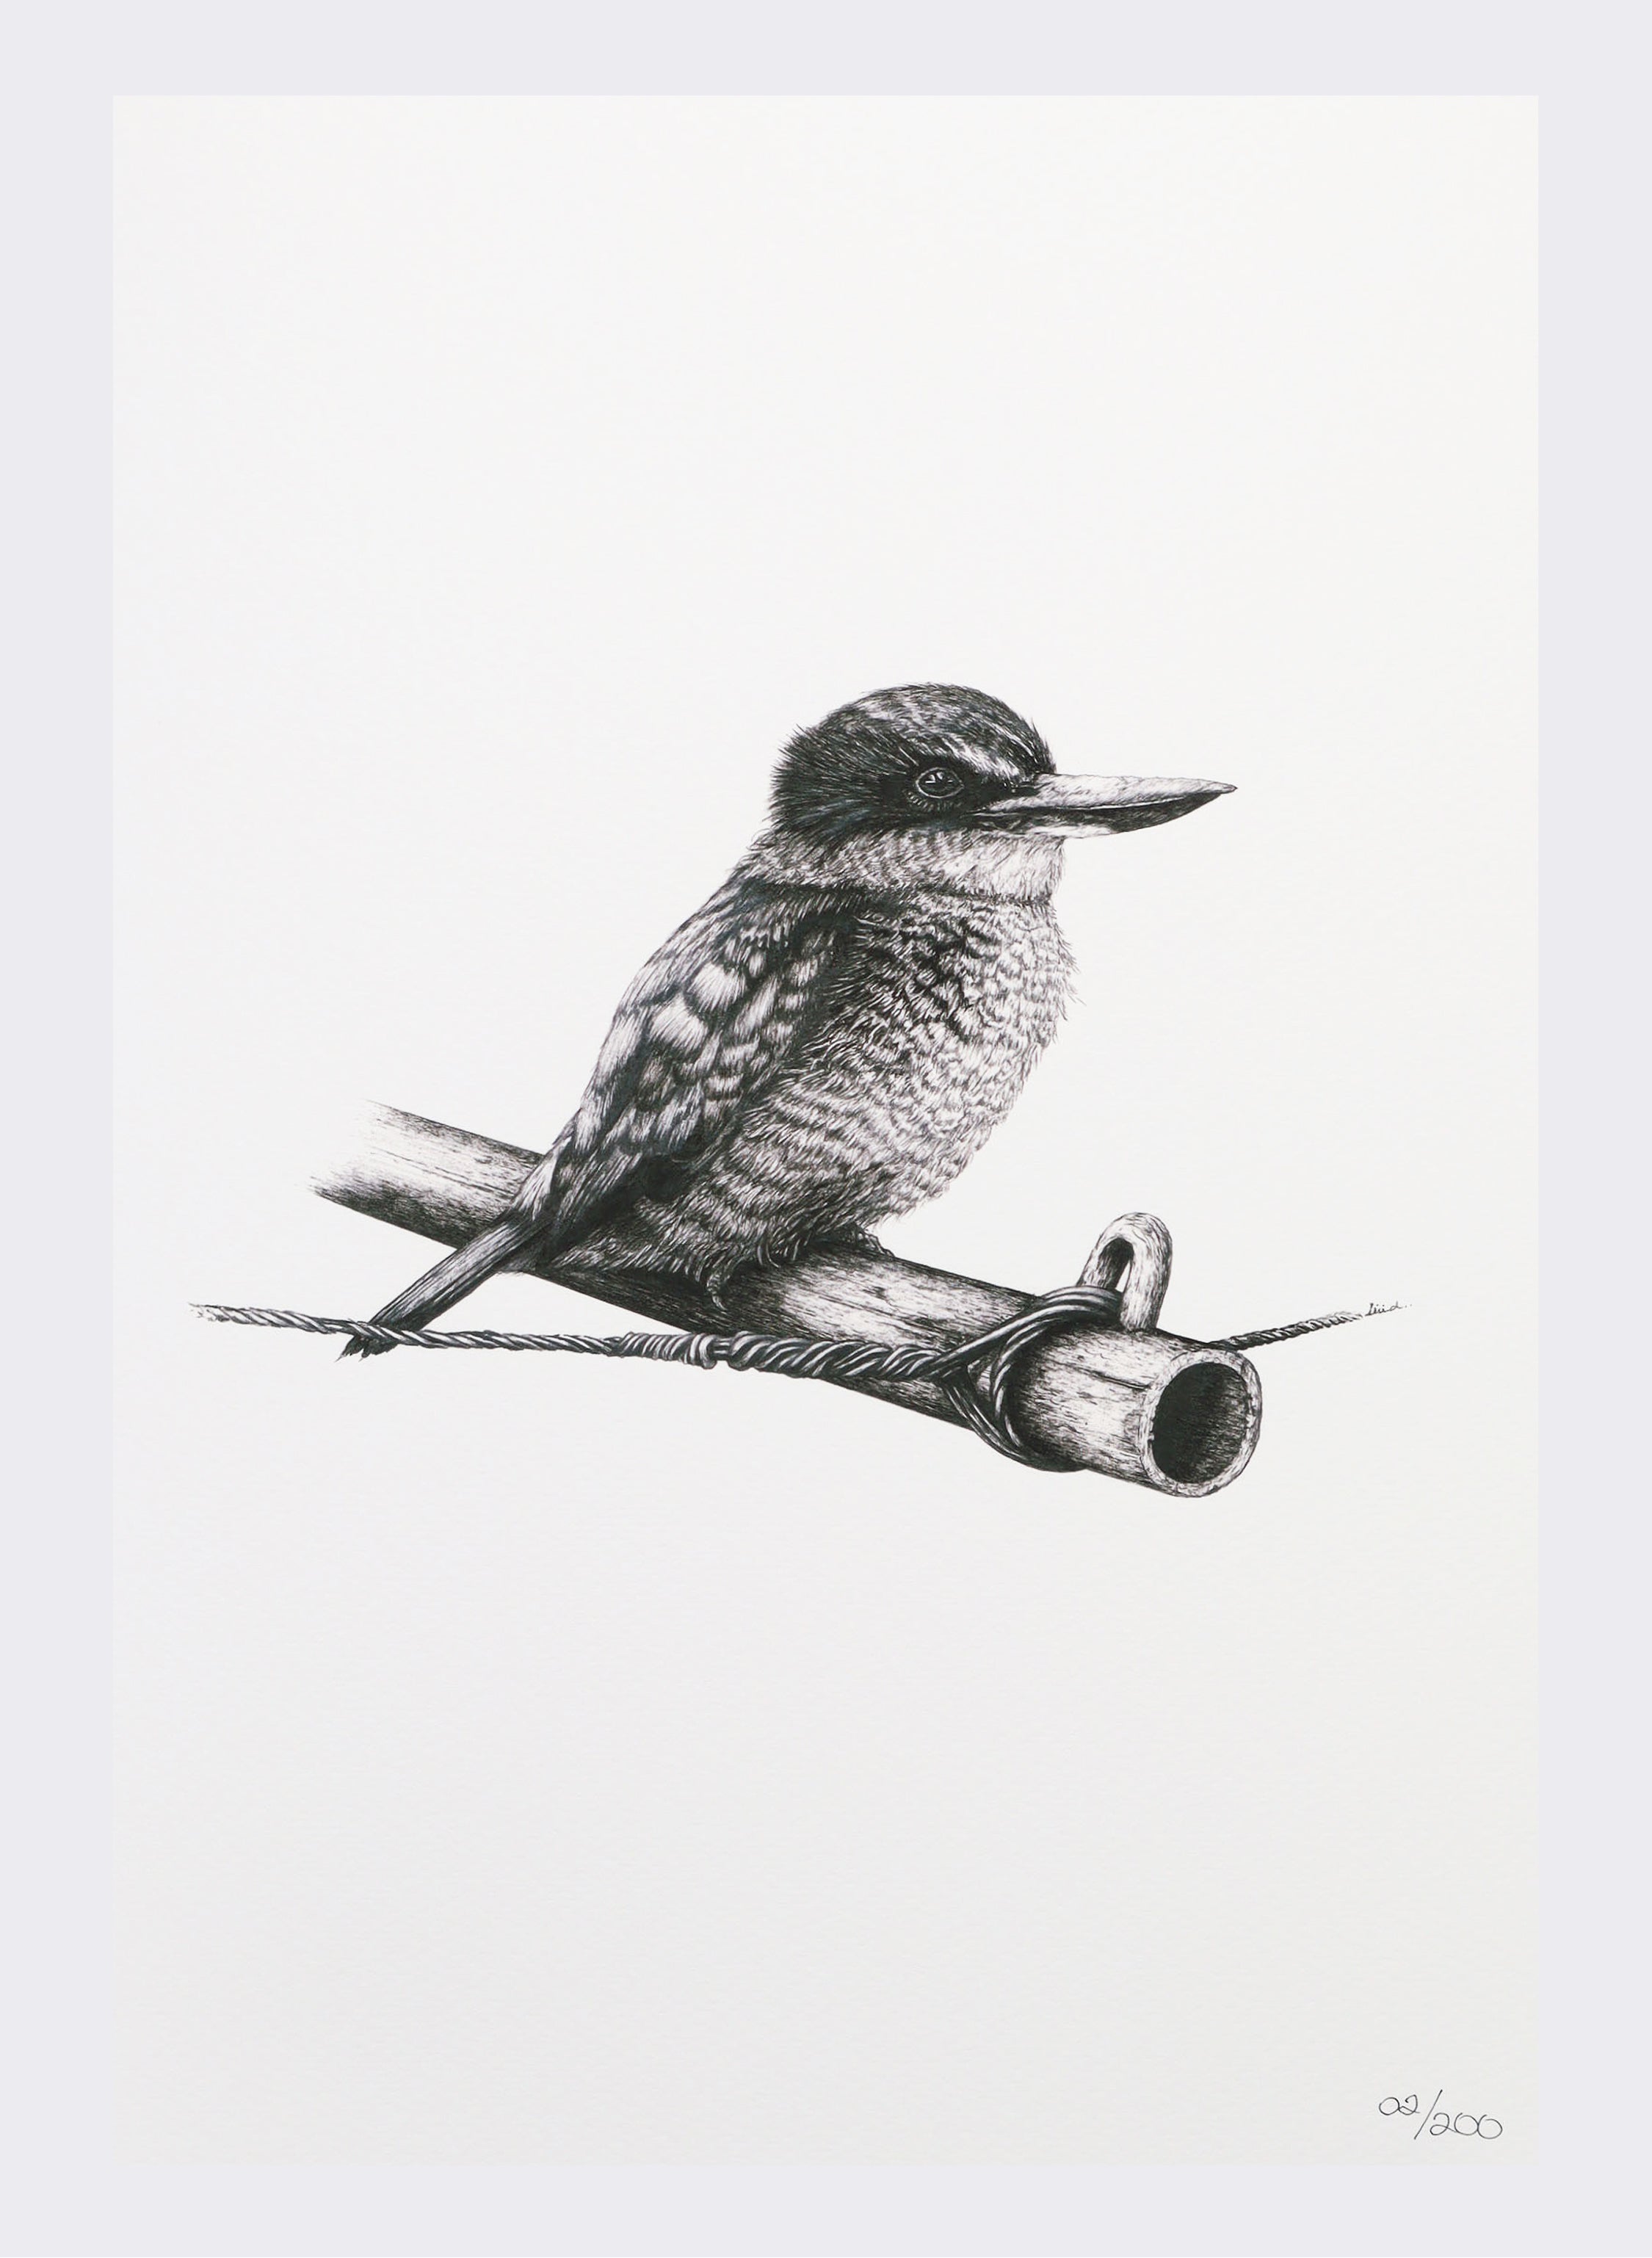 Kingfisher on Clothes Line - Giclée Print